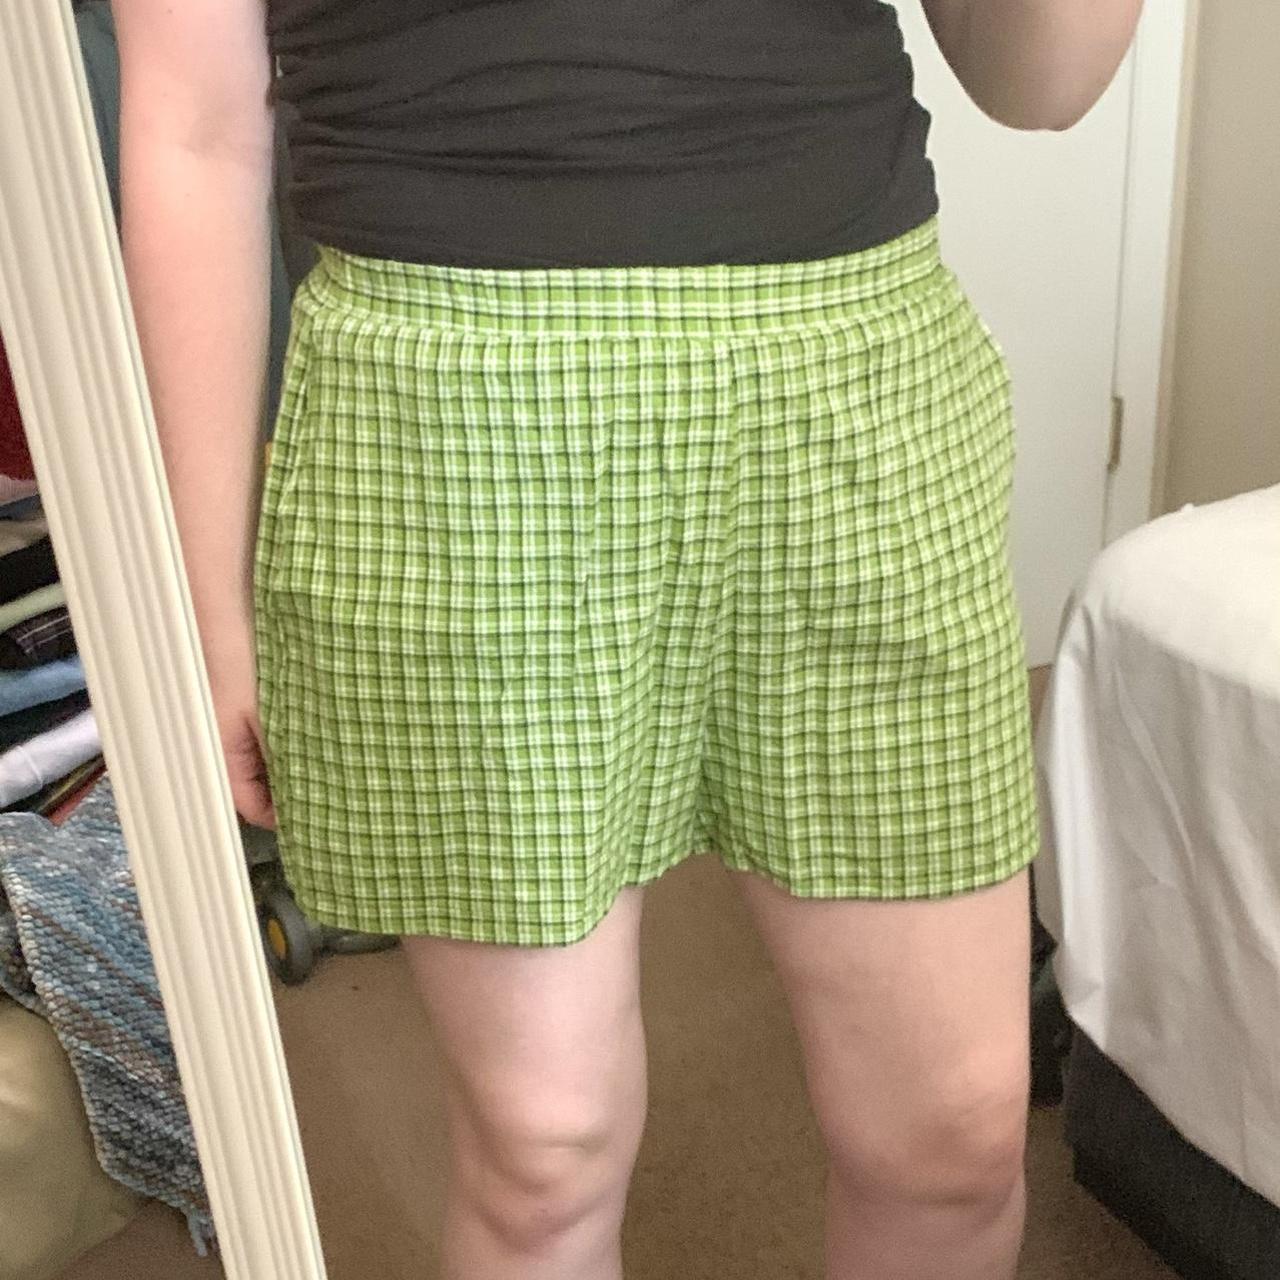 Dizzy Lizzy Women's Green Shorts